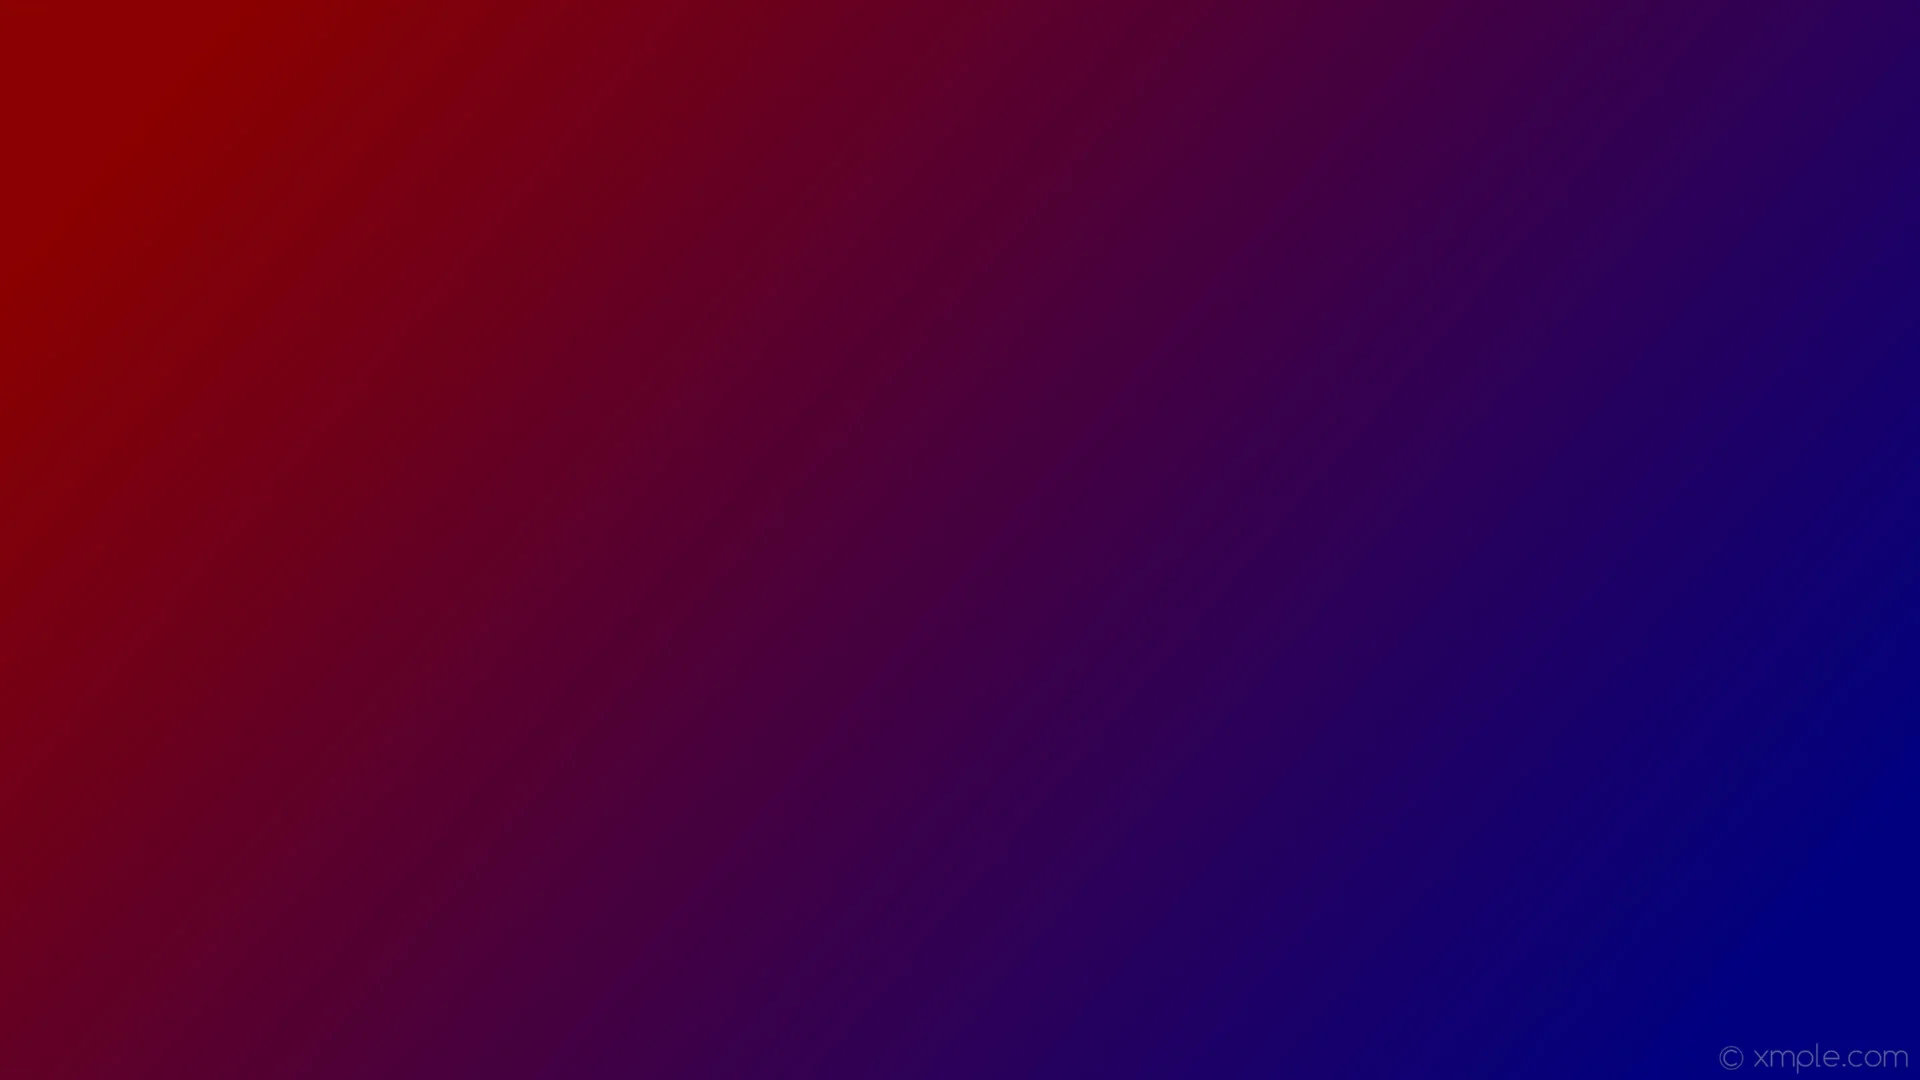 wallpaper gradient linear red blue dark red navy #8b0000 #000080 165Â°